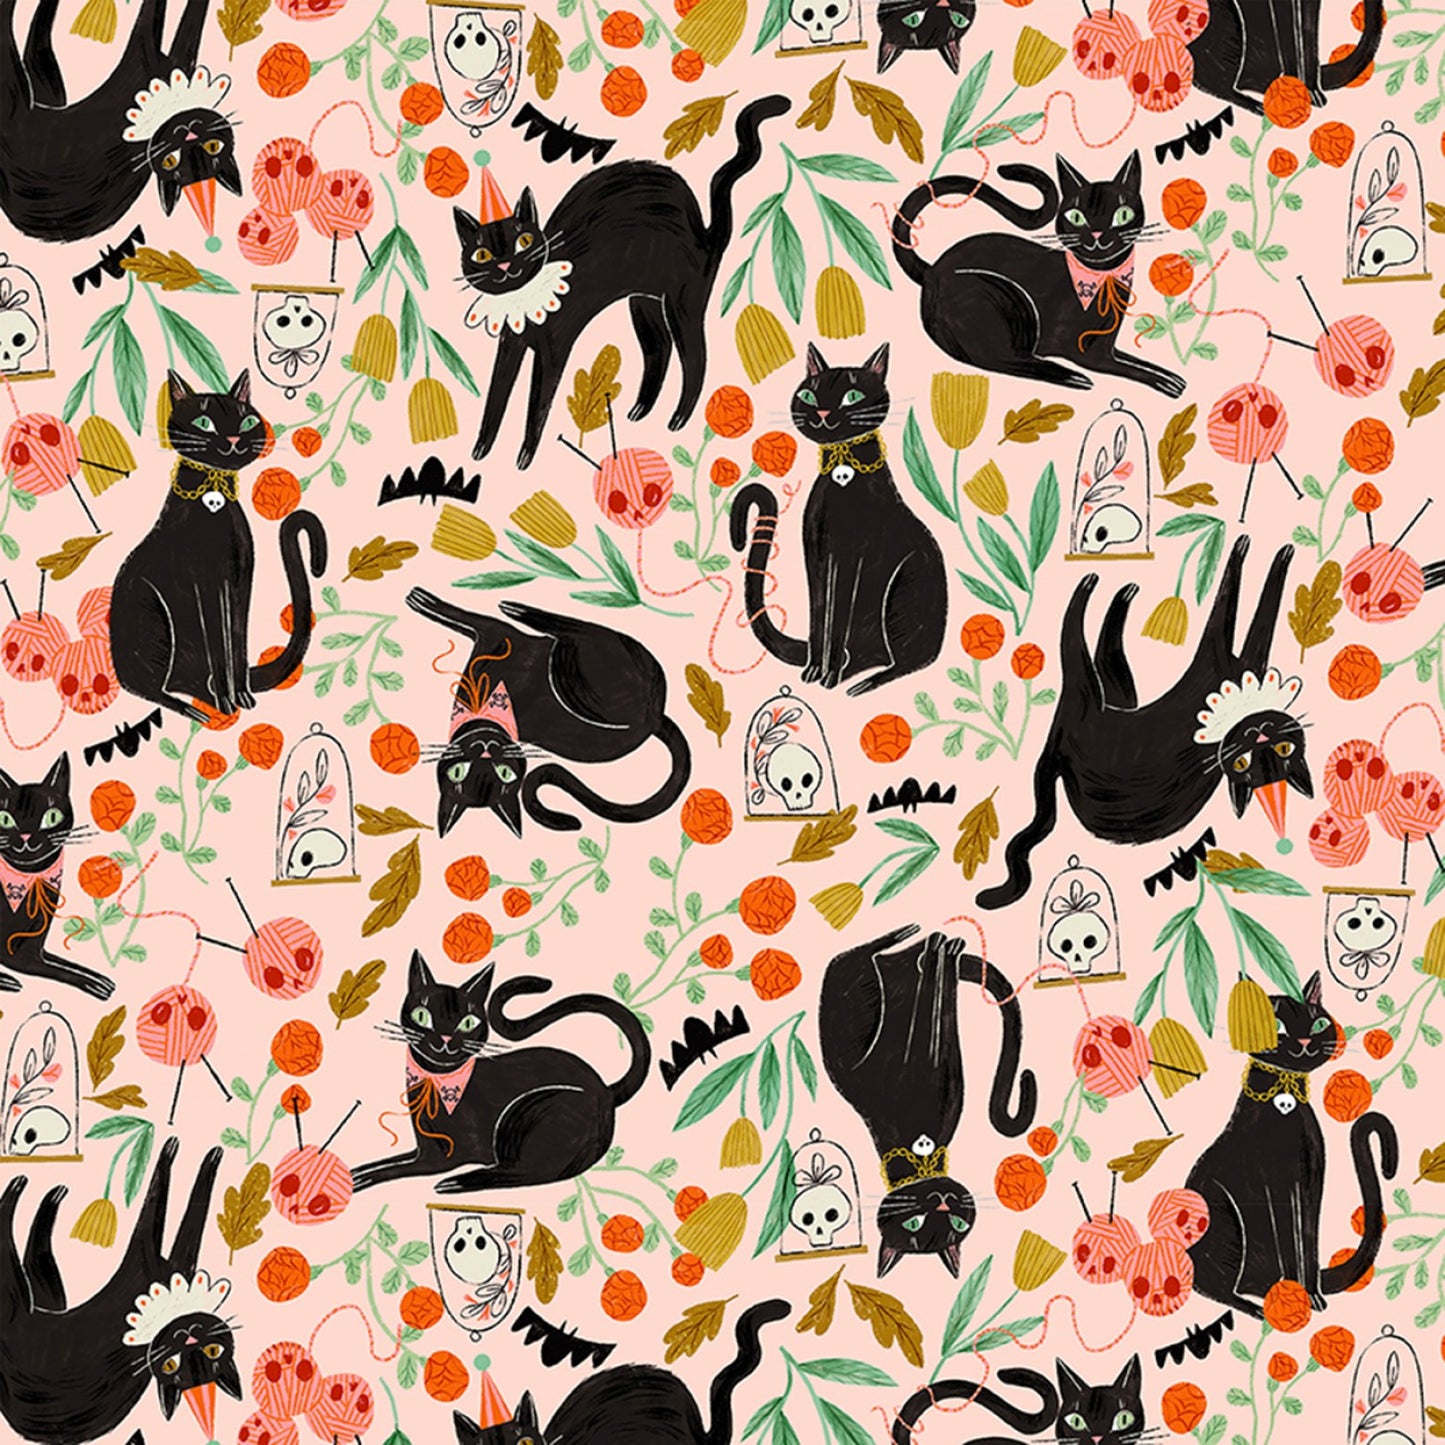 Dear Stella Cat Fabric - Cream Puff Creepy Cats - Boo - Black Cat - Halloween - Cotton Fabric